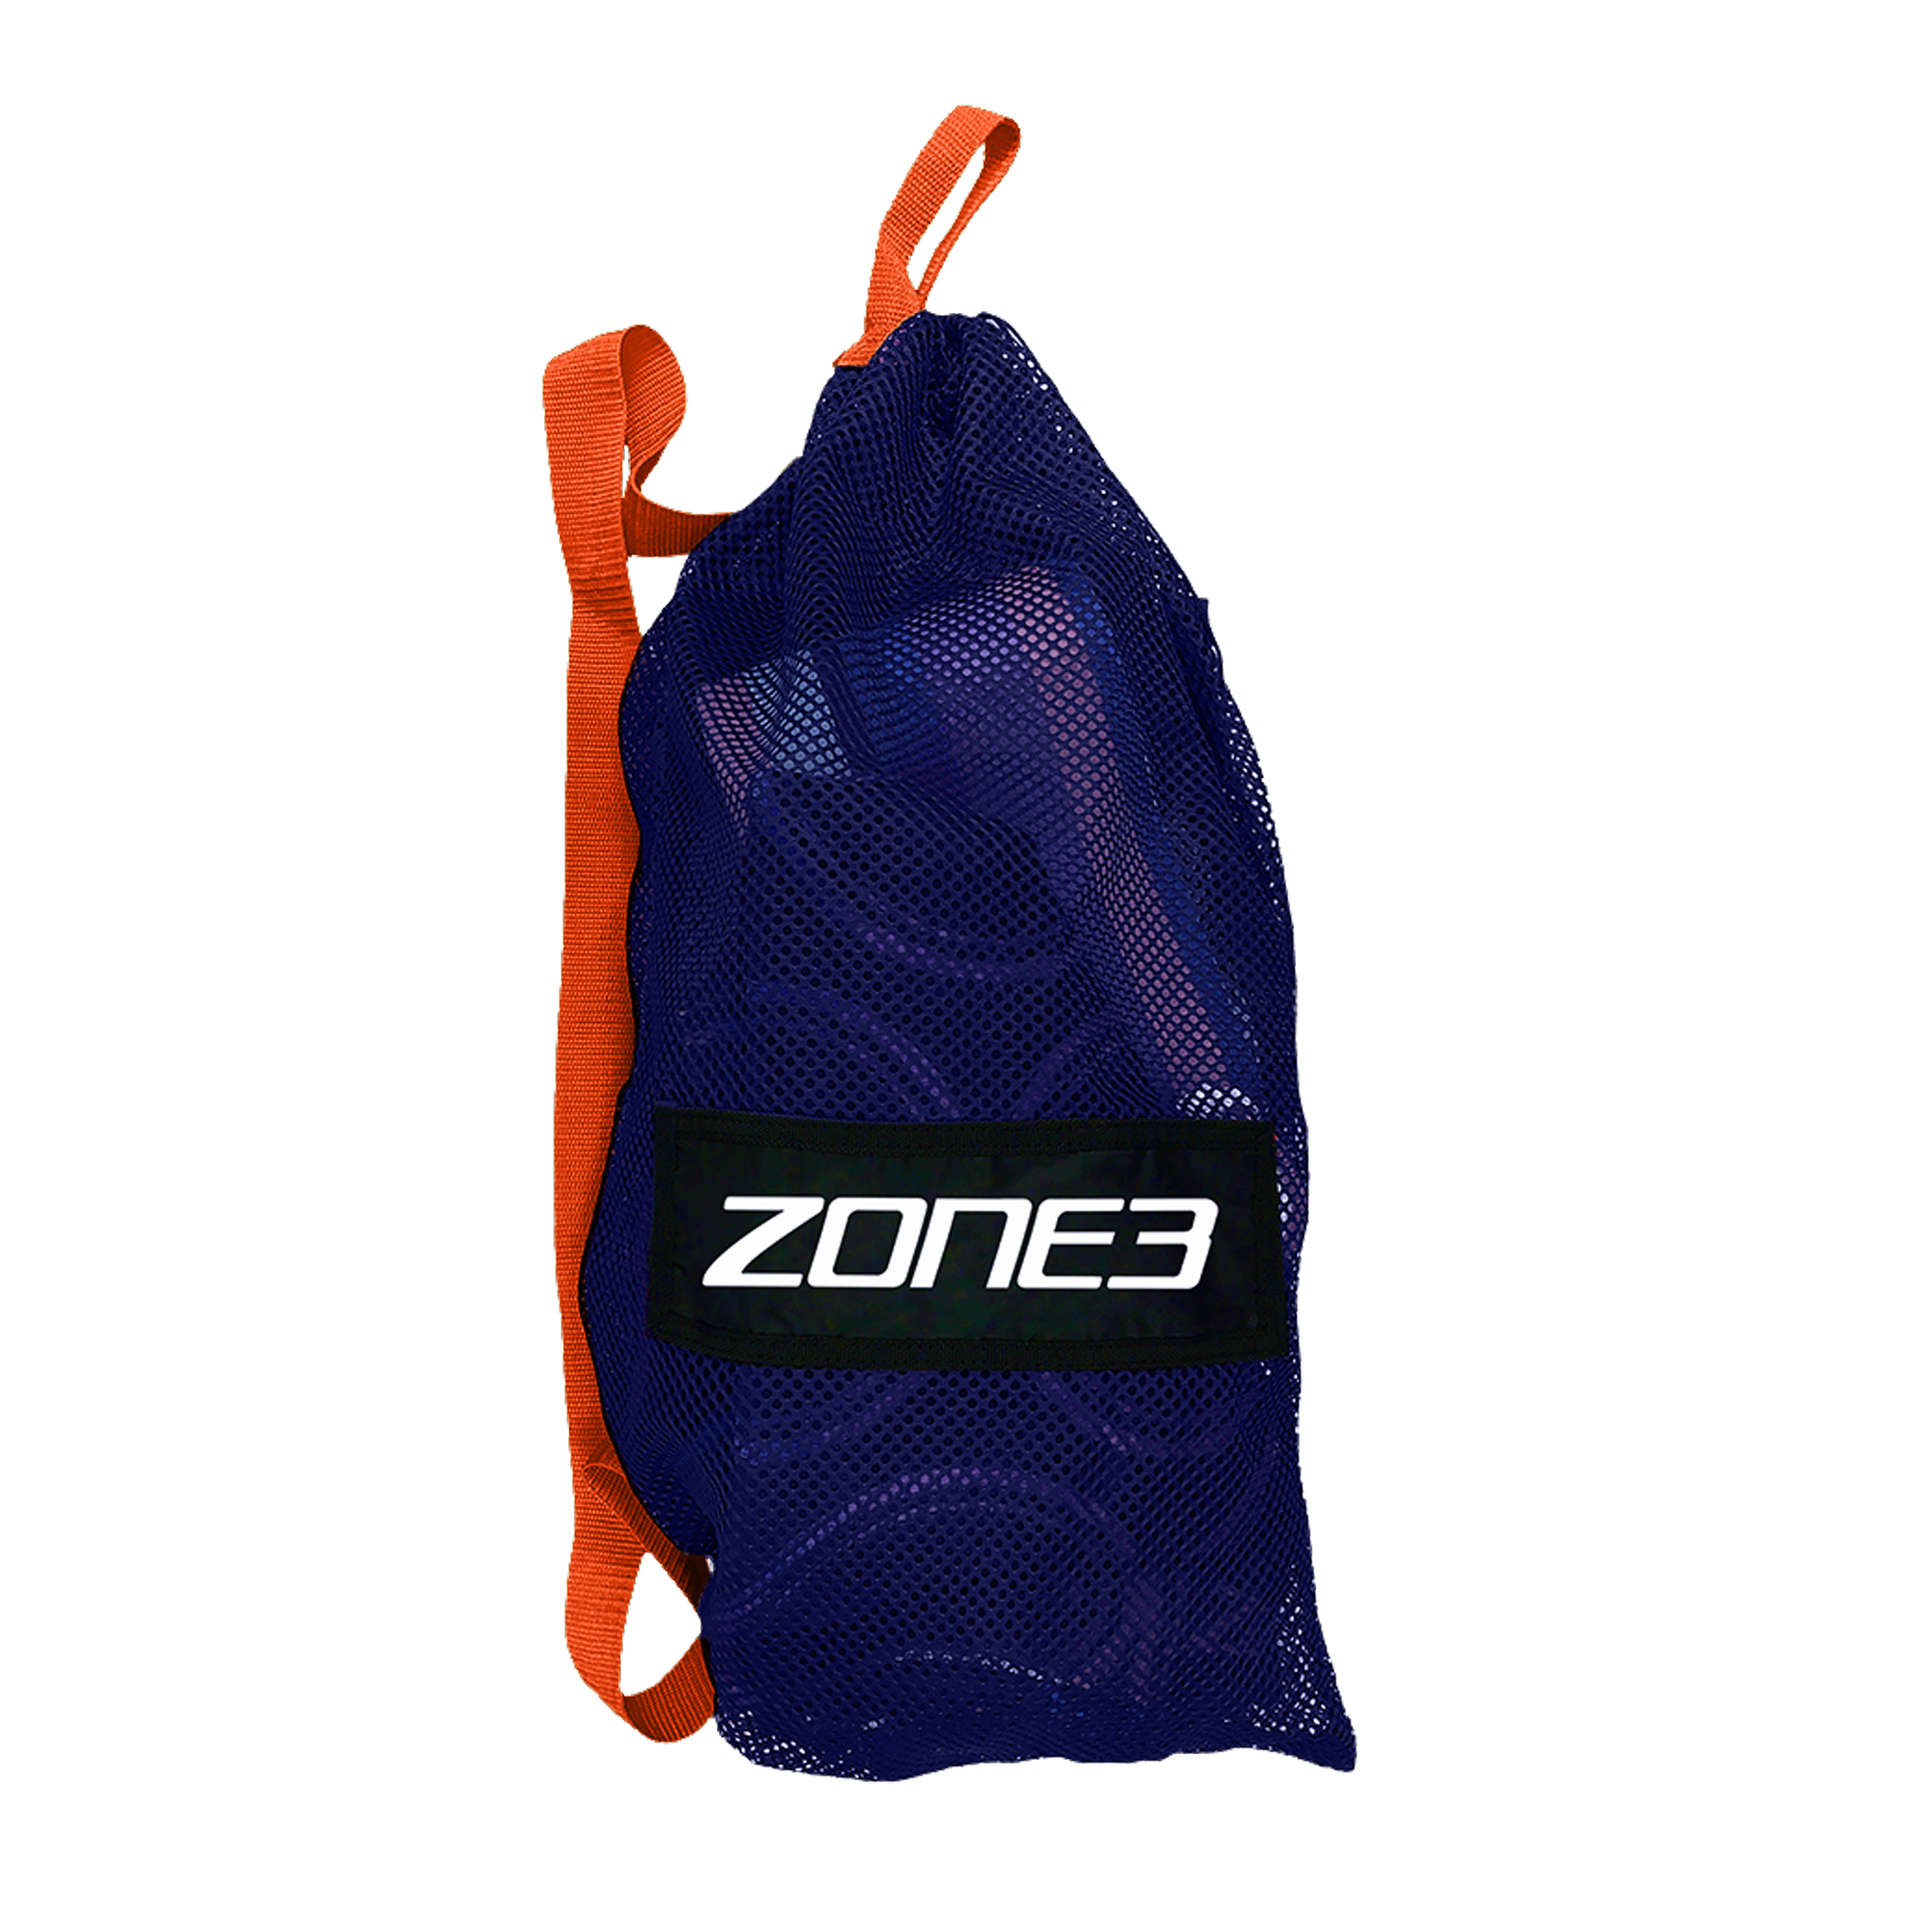 Zone3 Mesh Training Bag Large